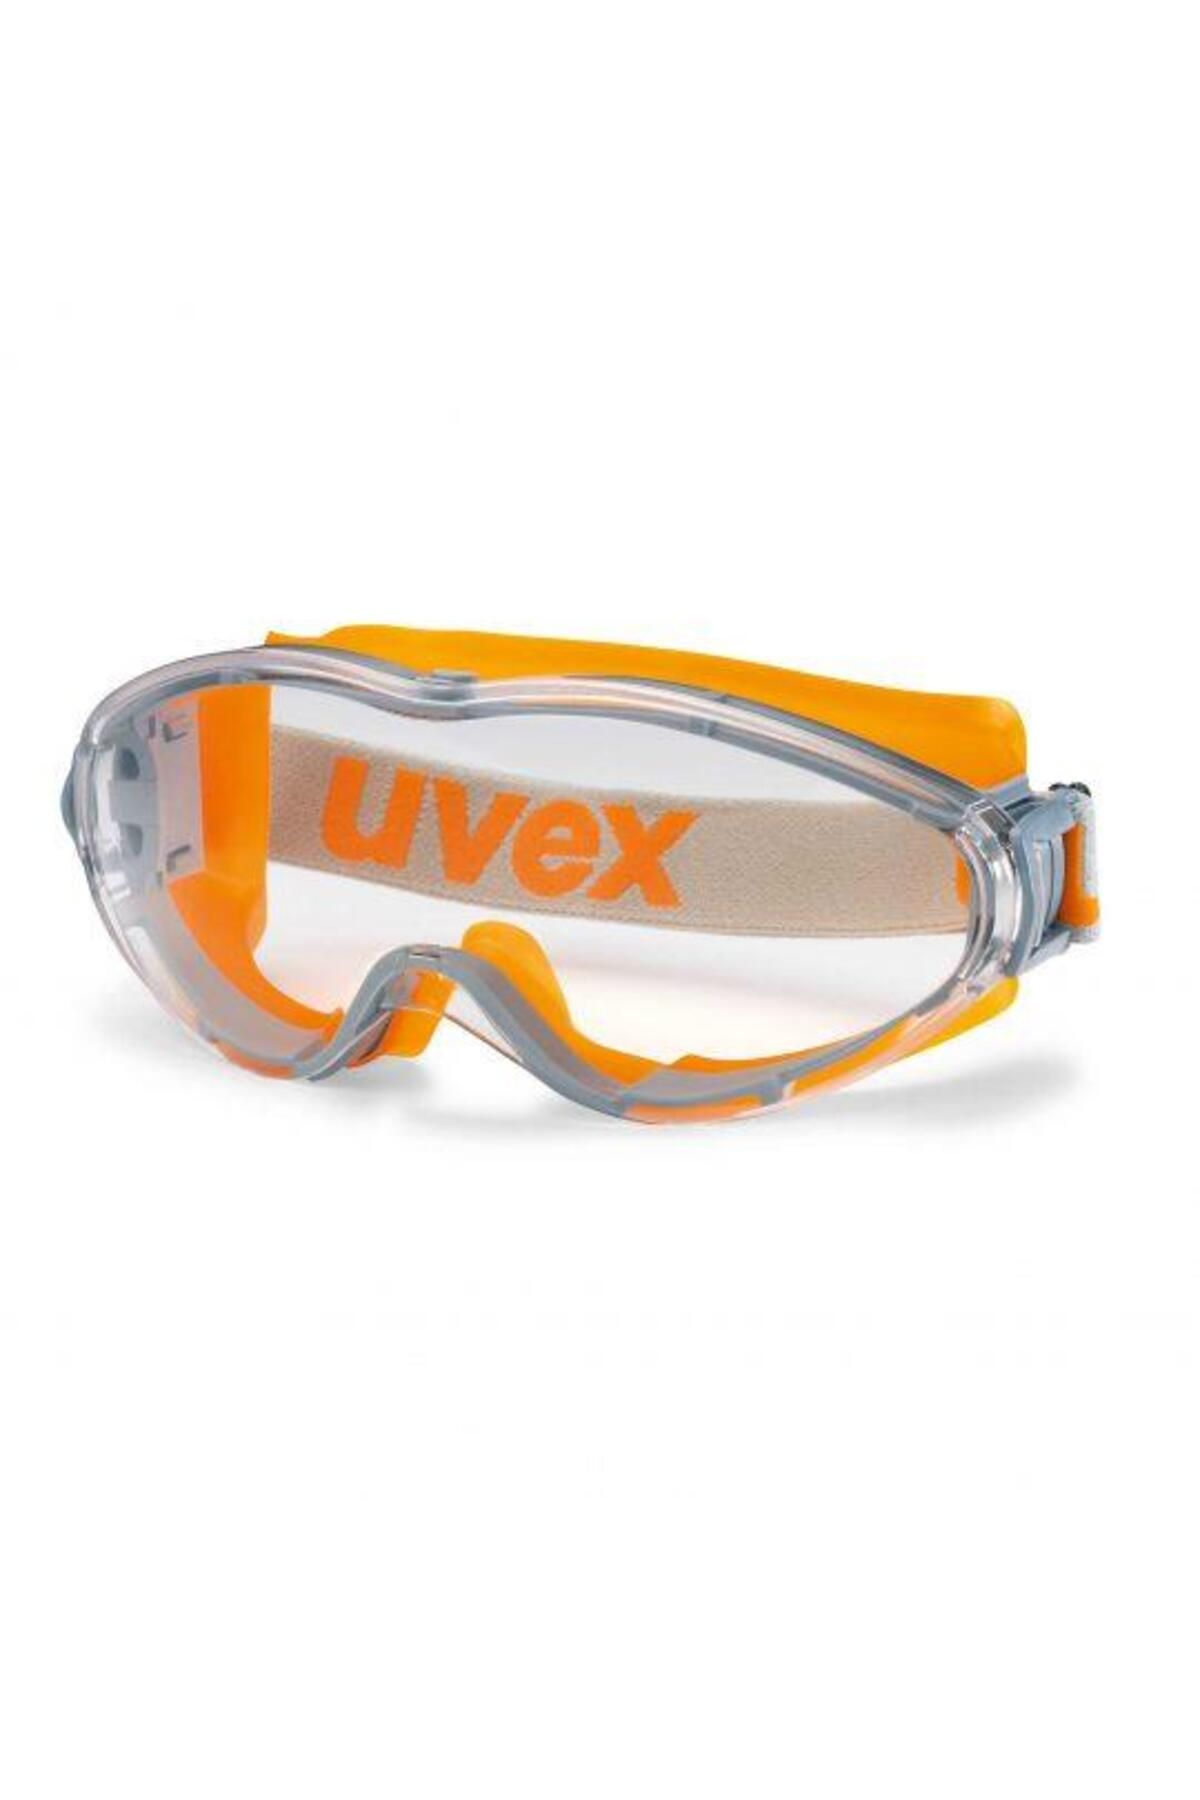 Uvex 9302245 Ultravision Geniş Görüş Iş Gözlüğü Şeffaf